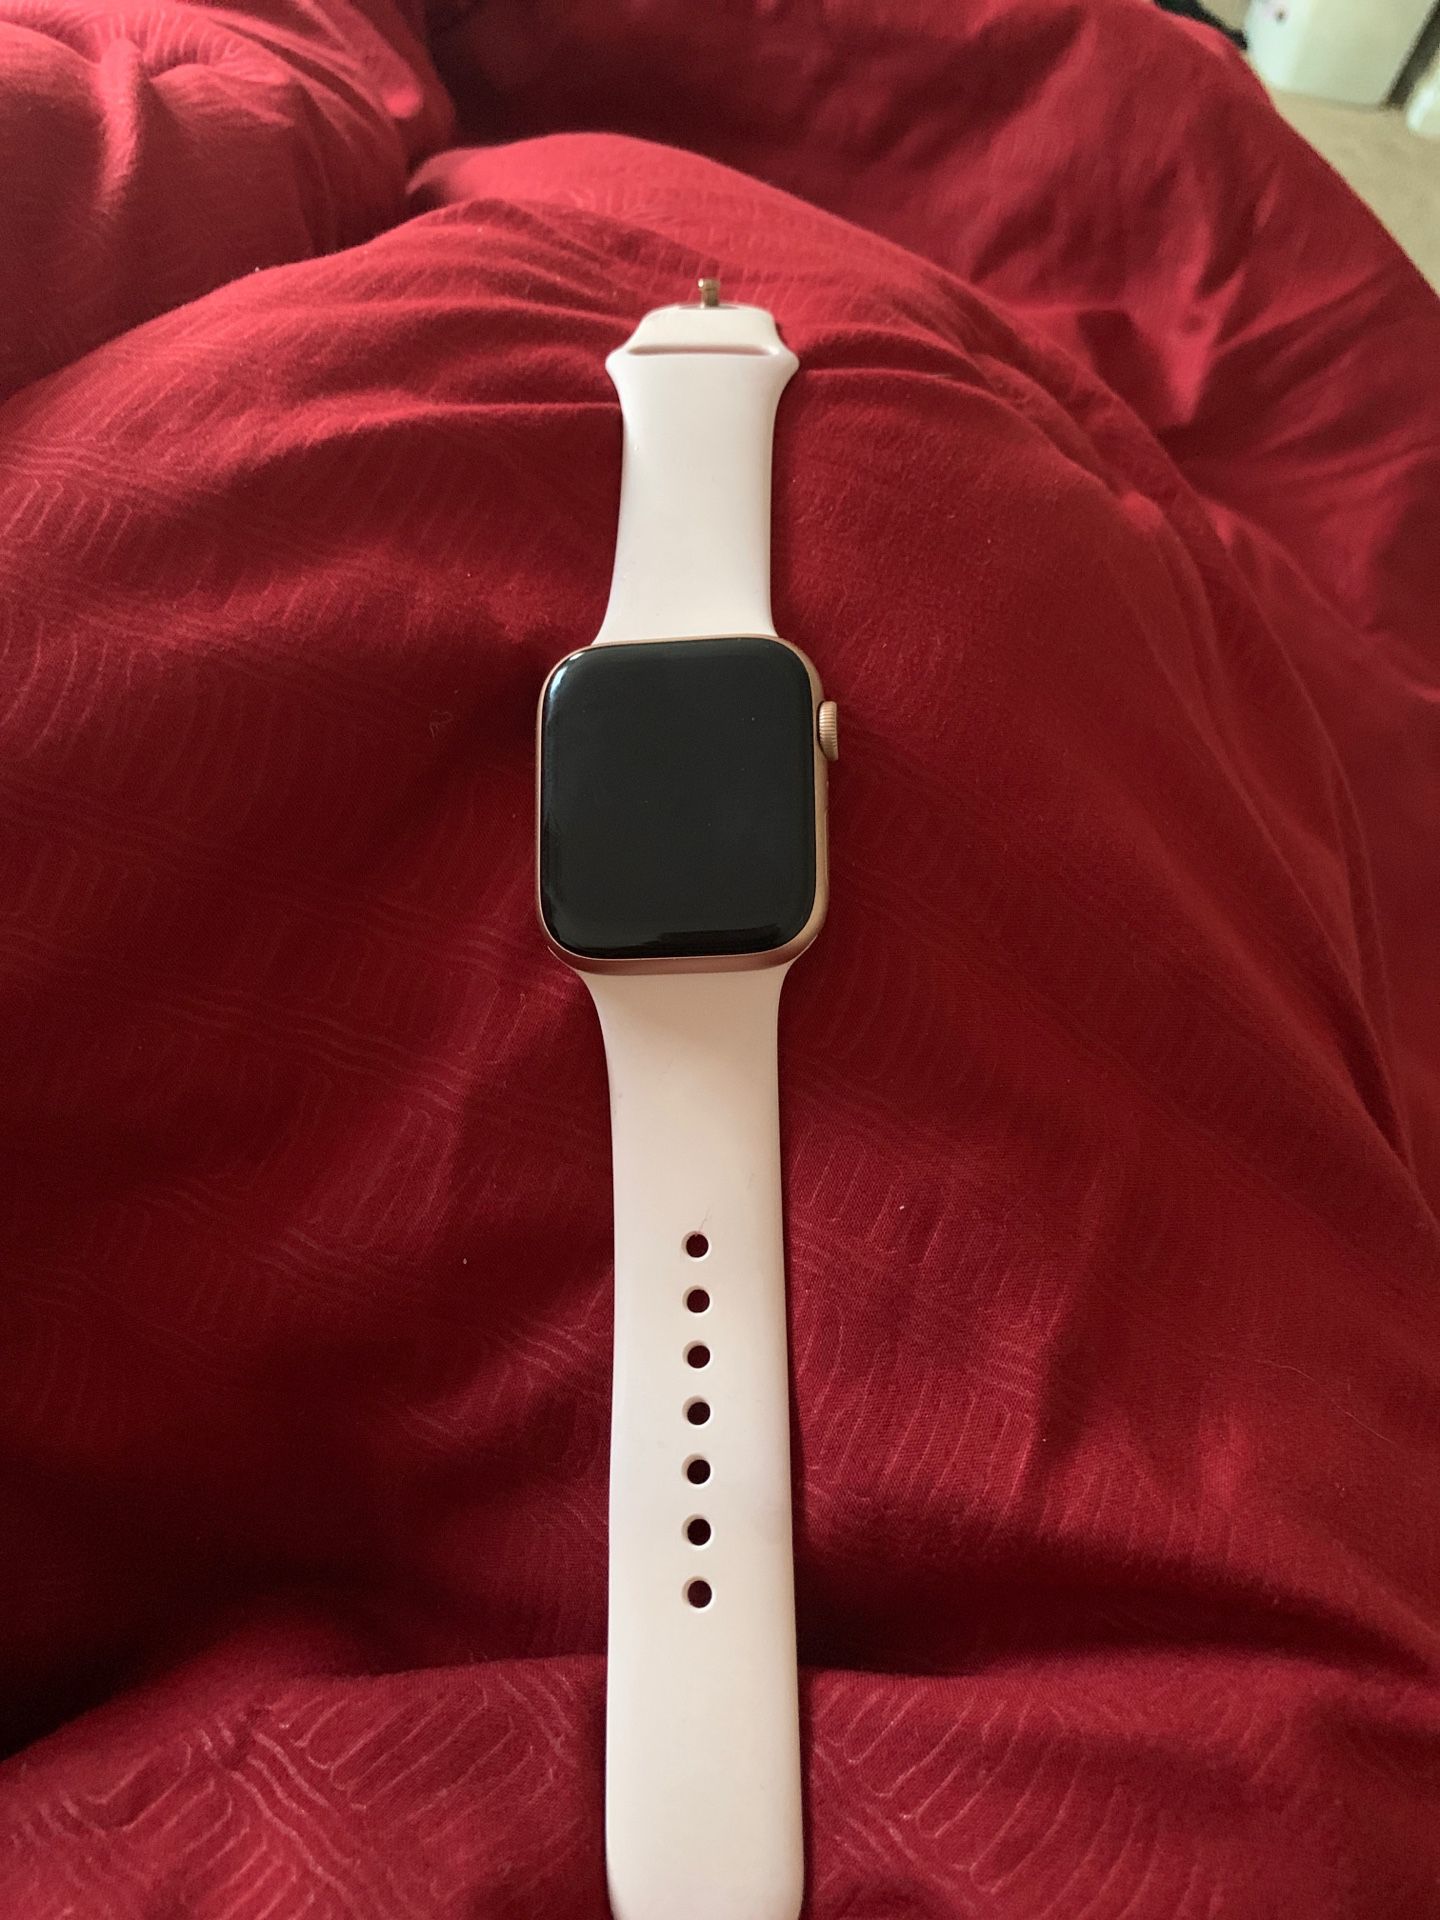 Apple Series 4 watch